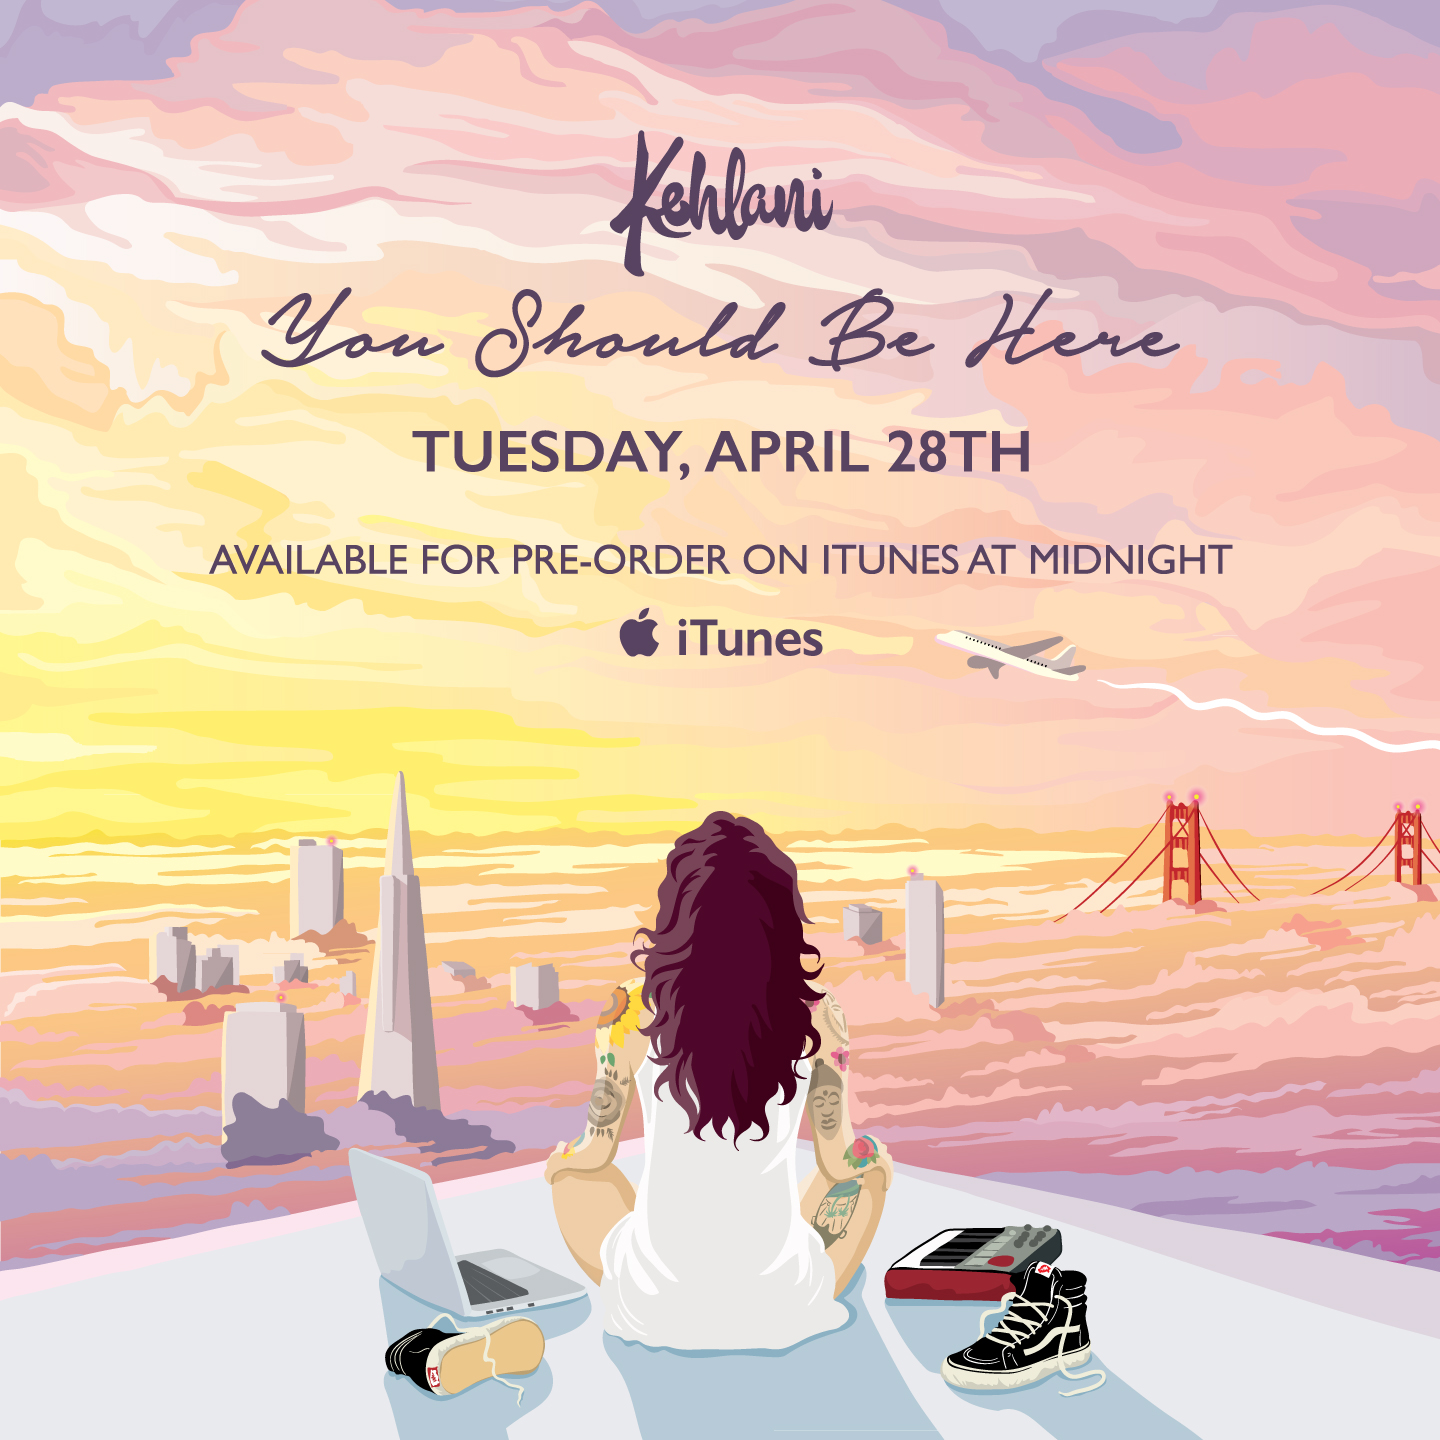 New Video: Kehlani "Alive" featuring Coucheron